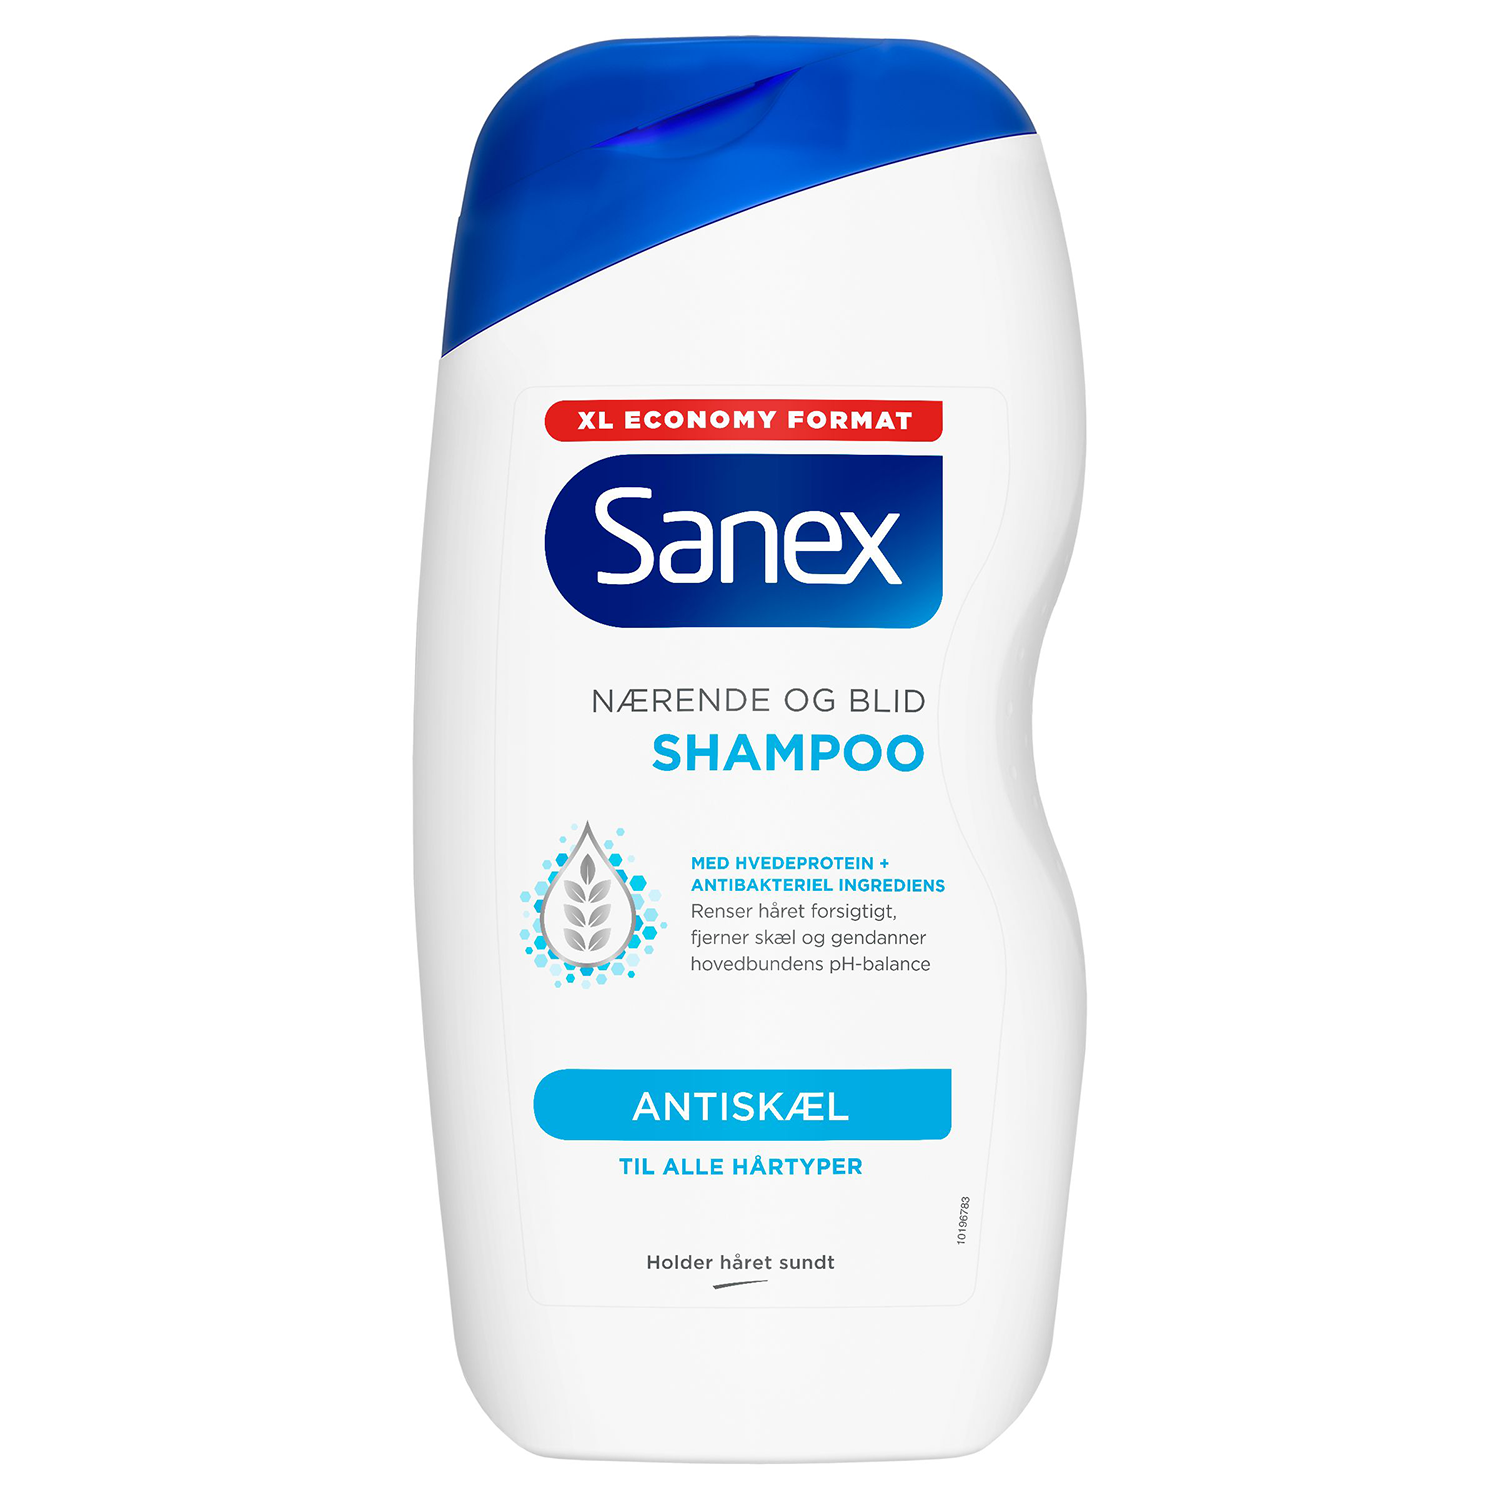 Sanex Shampoo Antiskæl 500